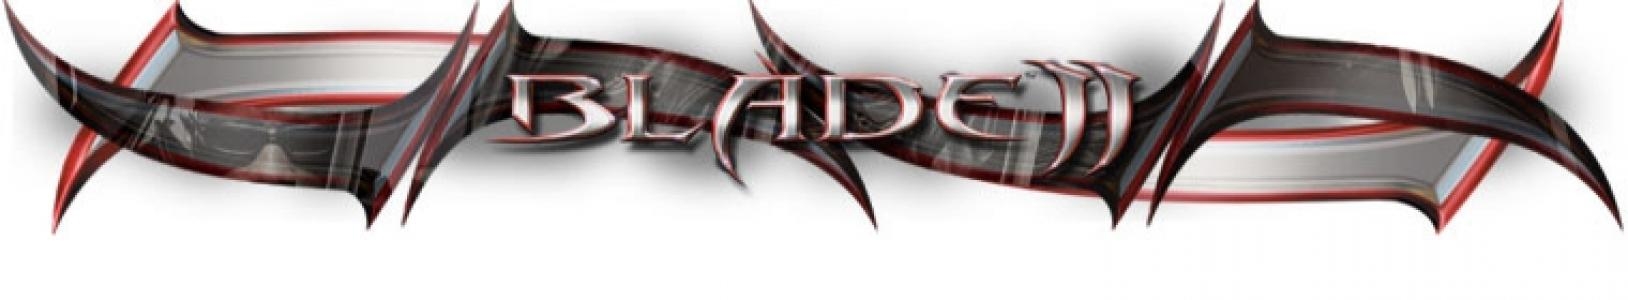 Blade II banner